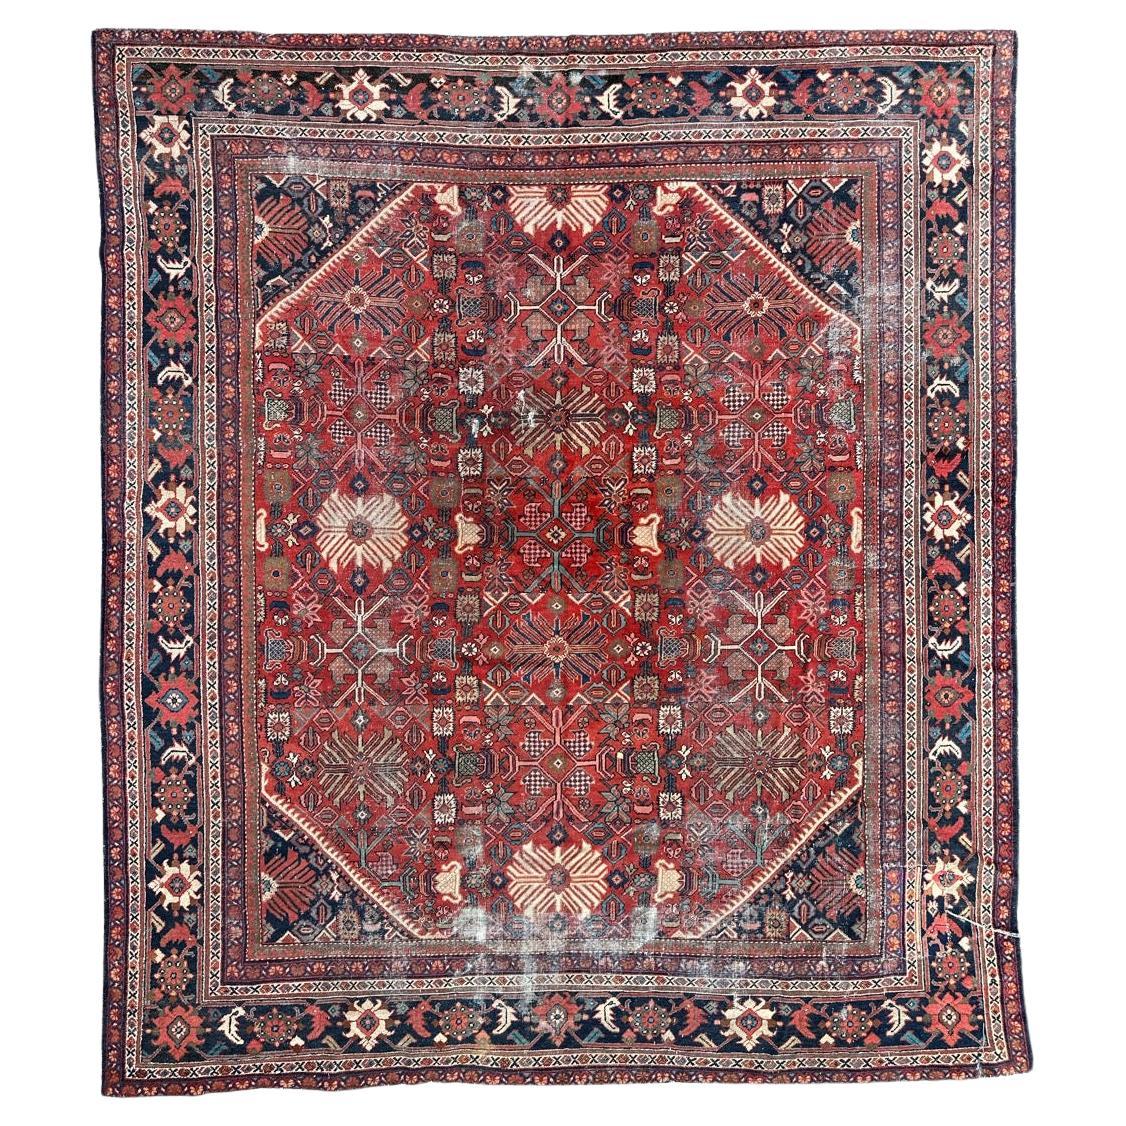 Bobyrug’s Pretty large antique mahal rug 